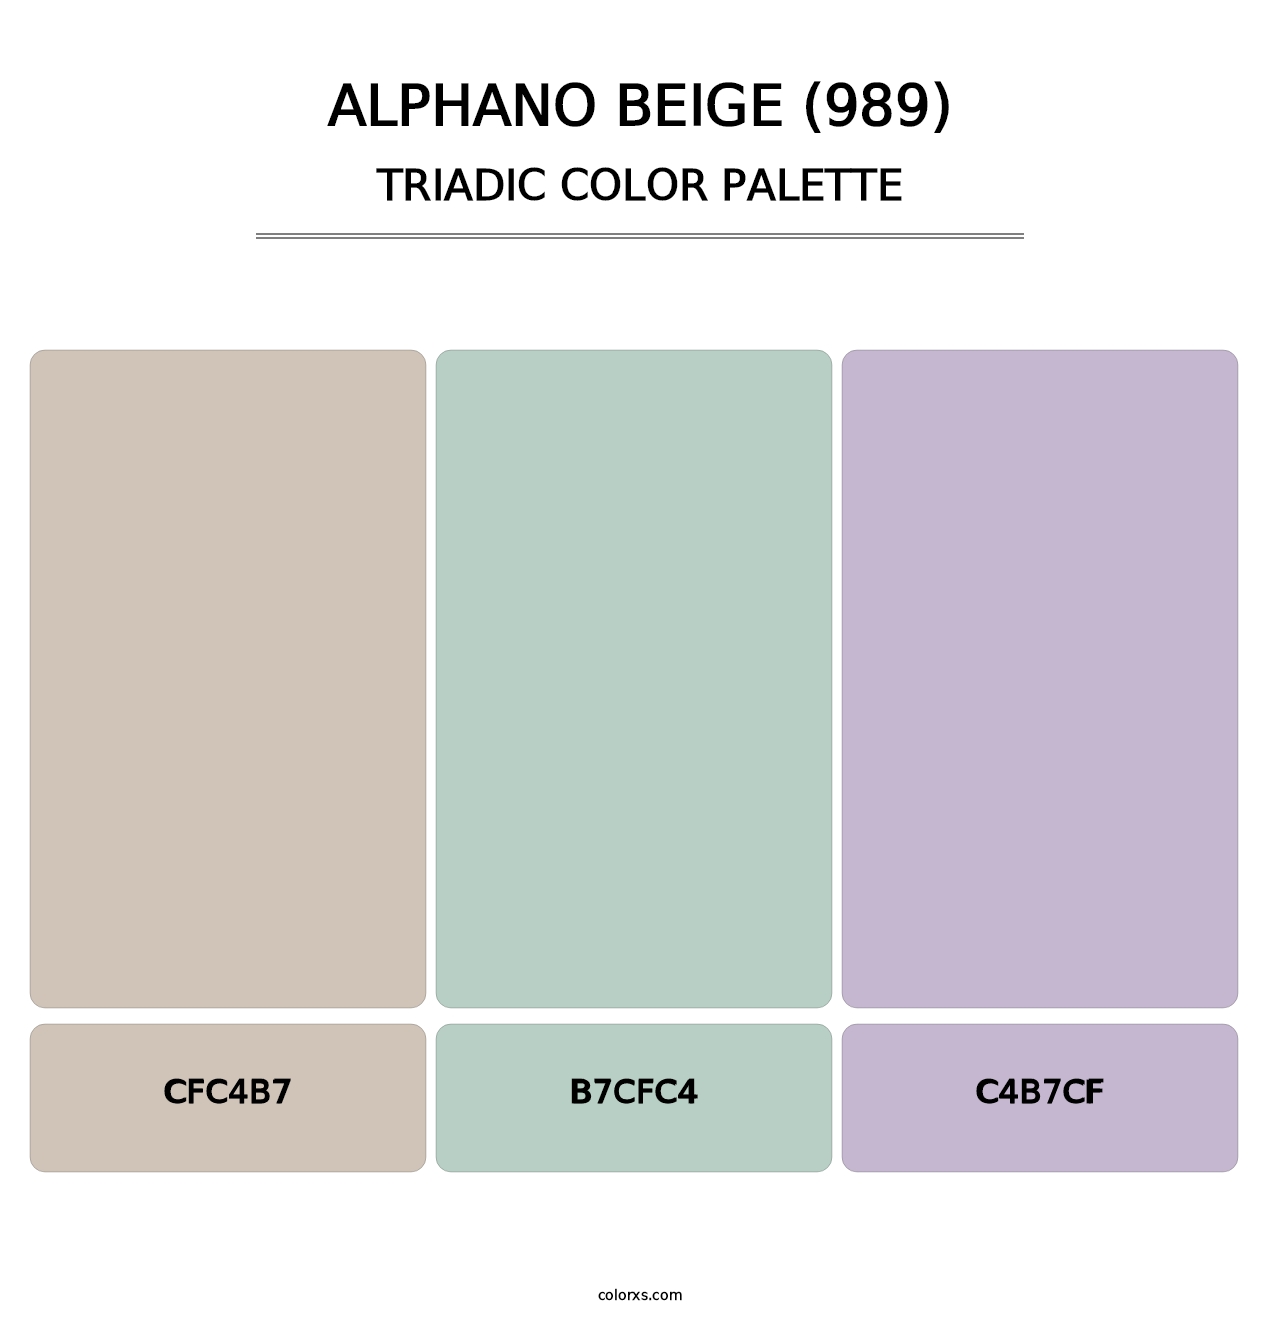 Alphano Beige (989) - Triadic Color Palette